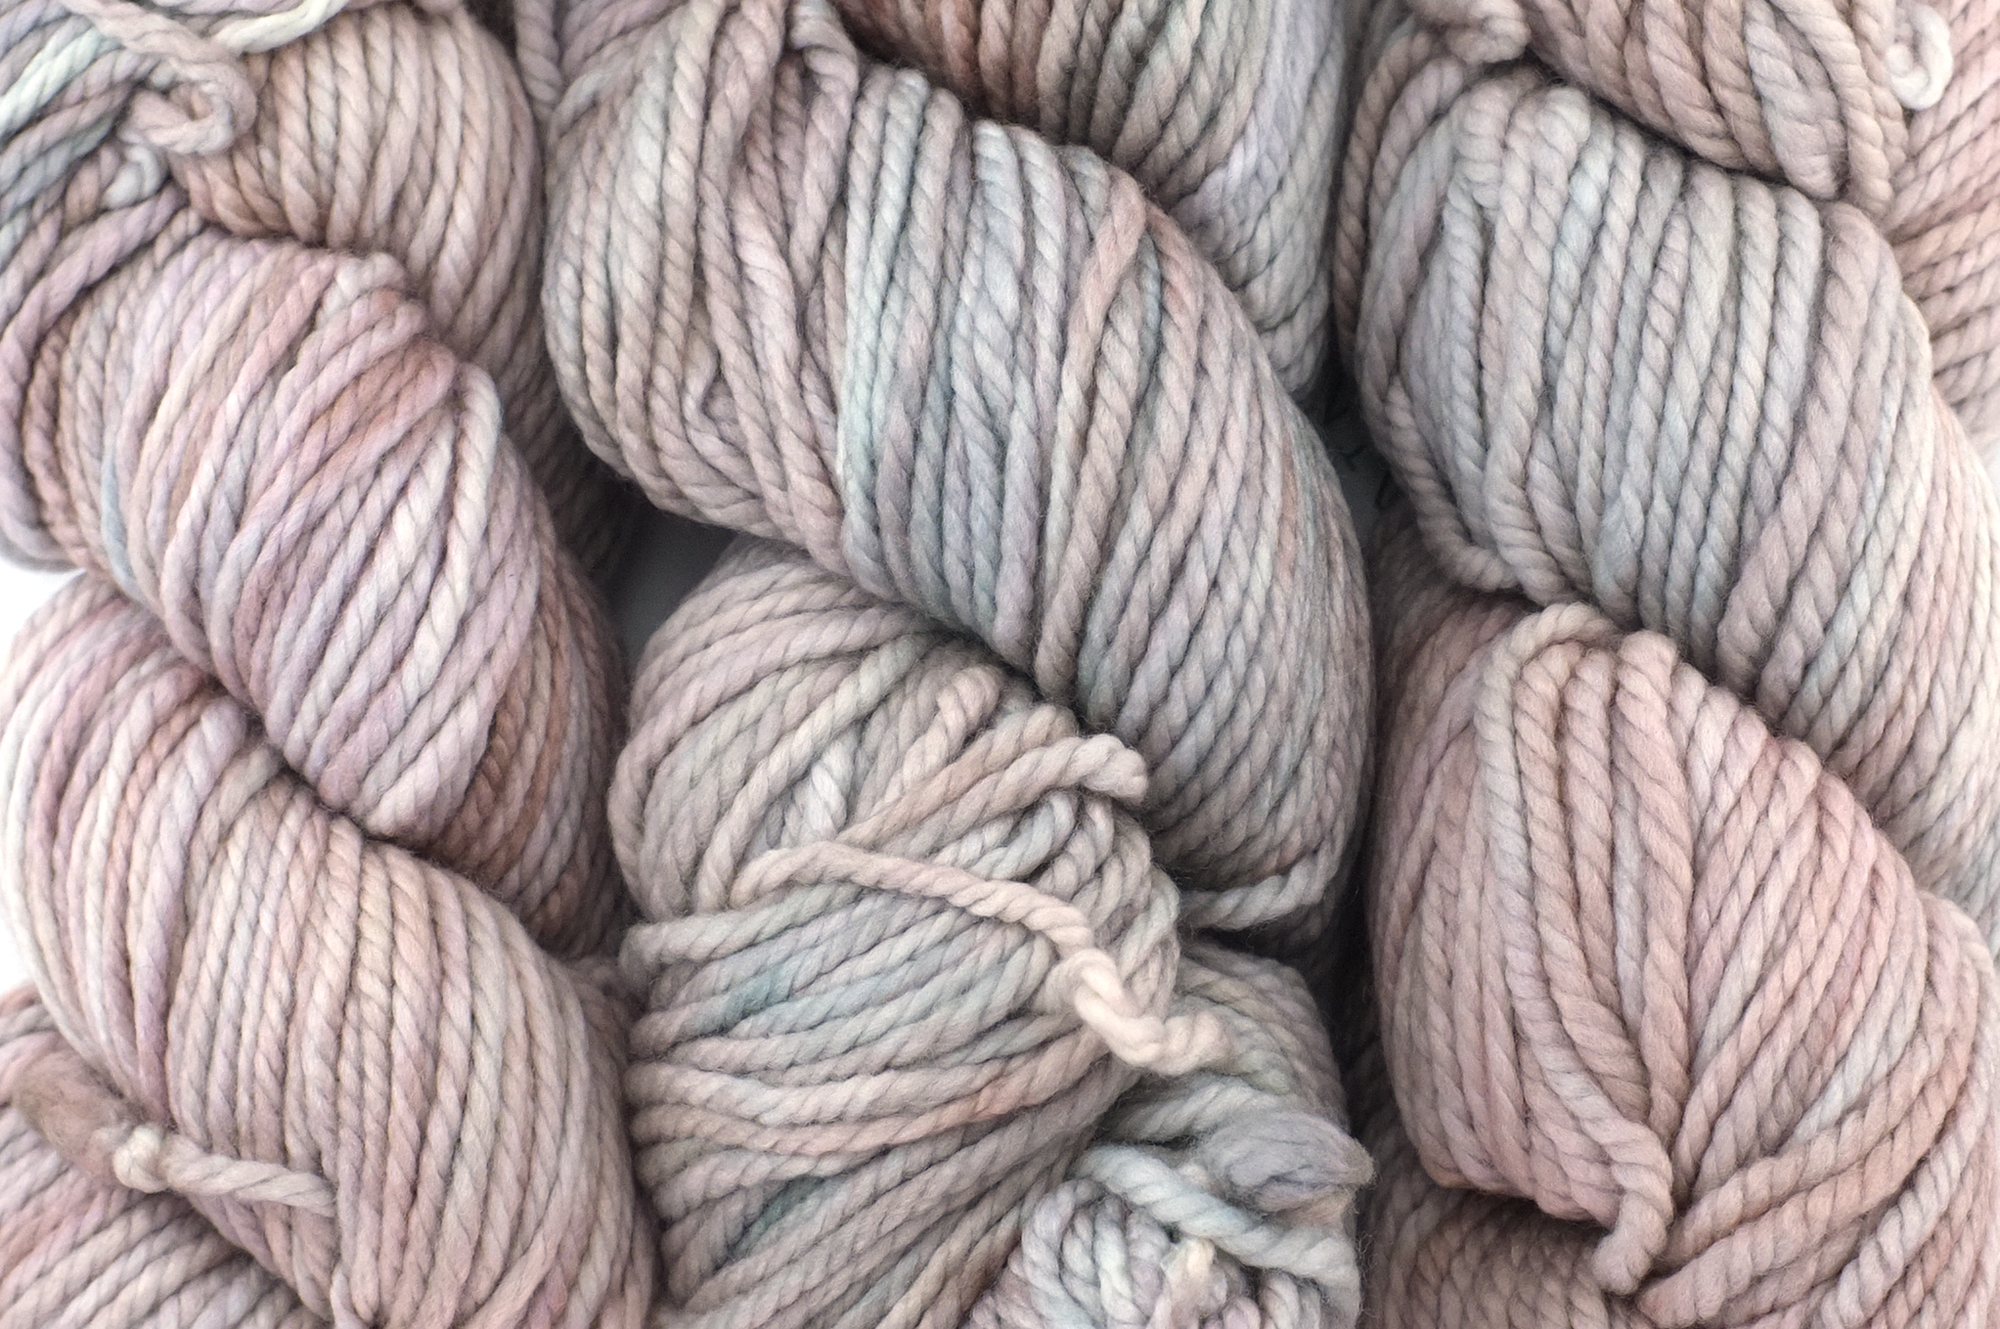 019 - Gordita dark brown chunky ecological merino wool